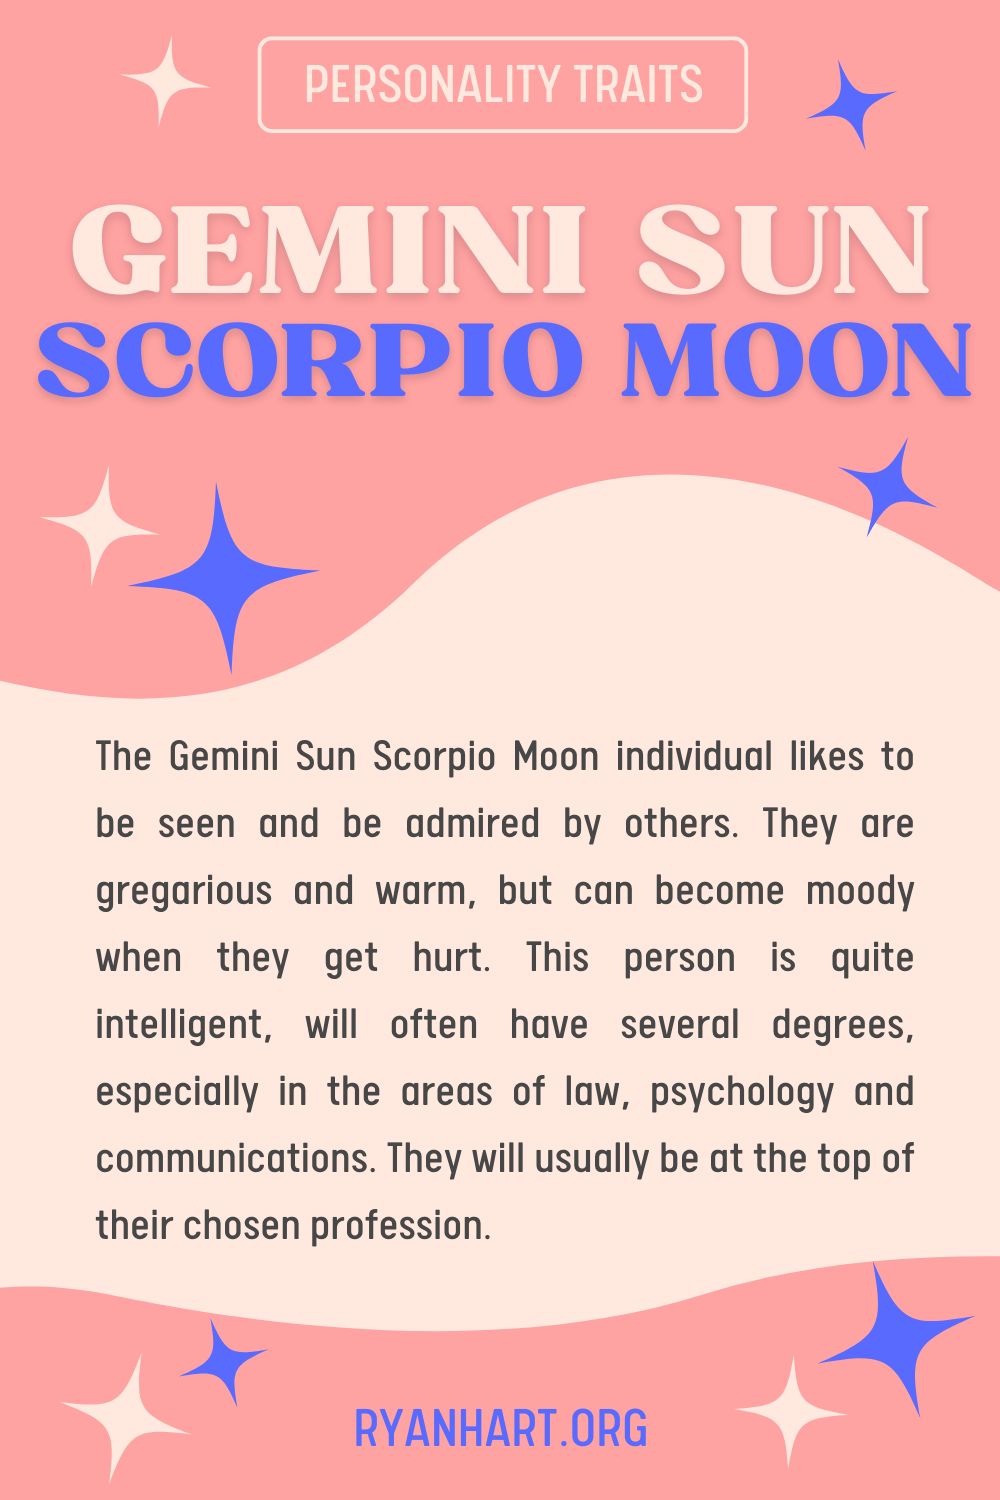 Gemini Sun Scorpio Moon Description